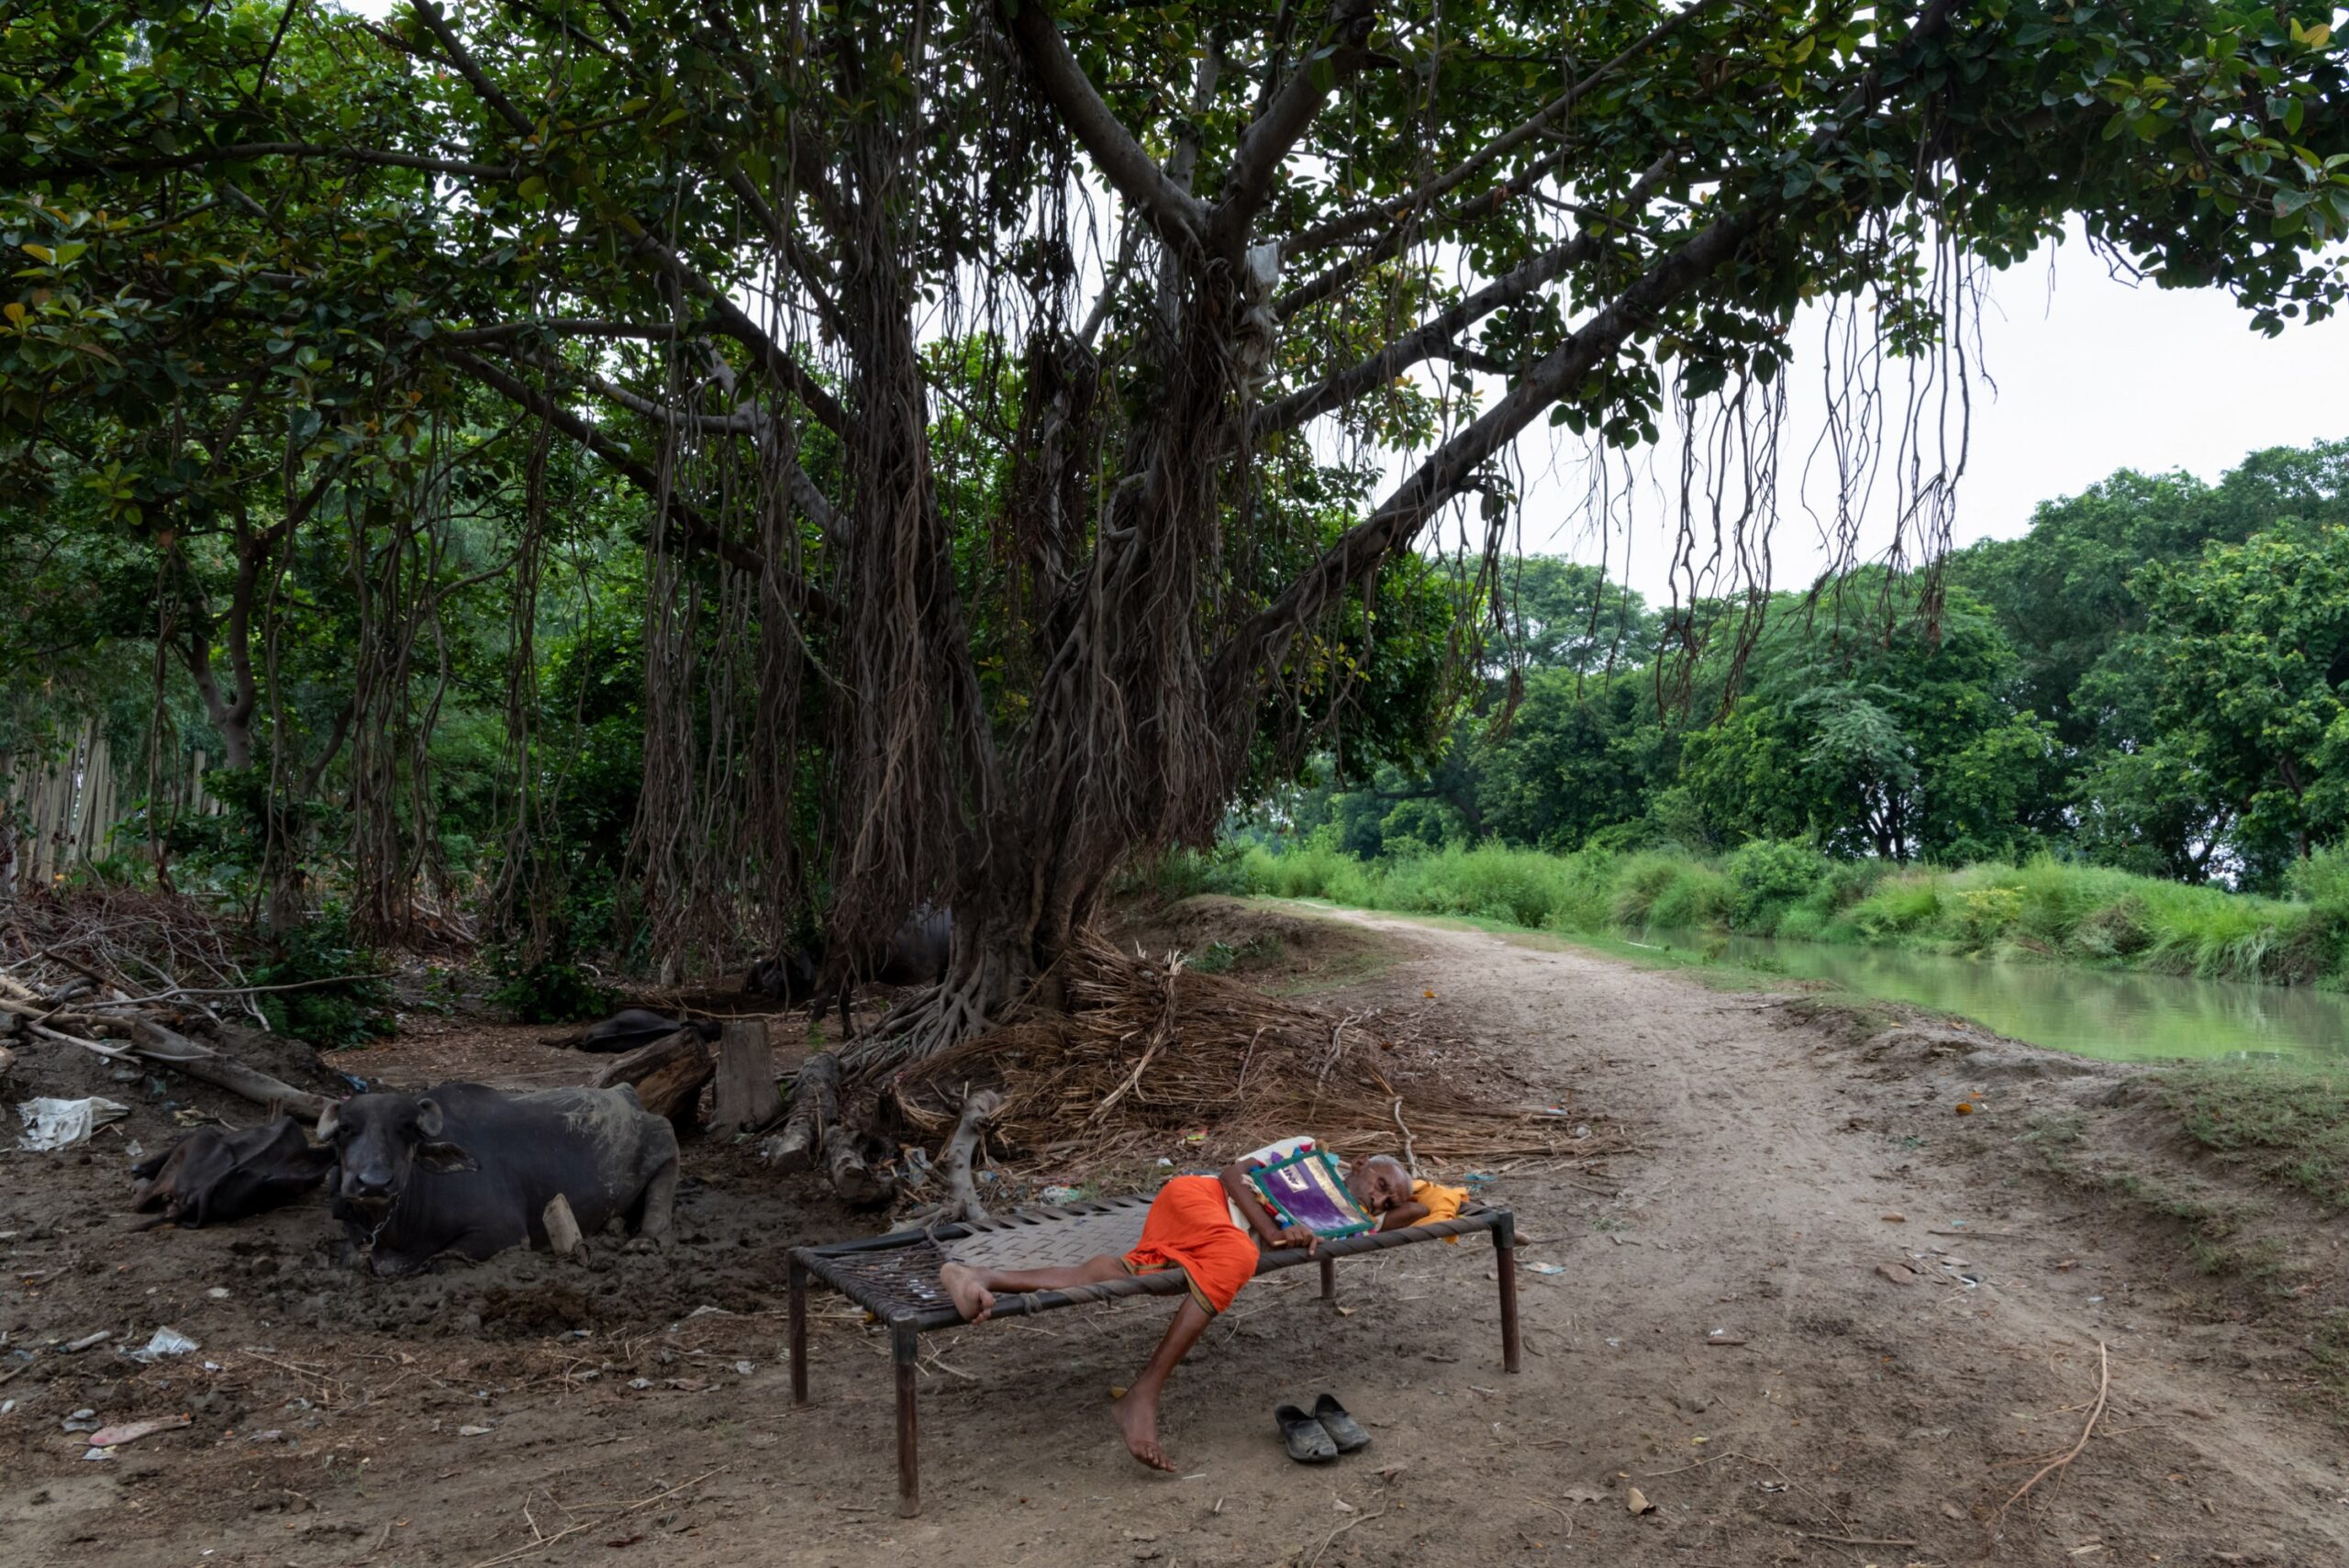 Raja Ram, 97, sleeps under a tree on a hot day